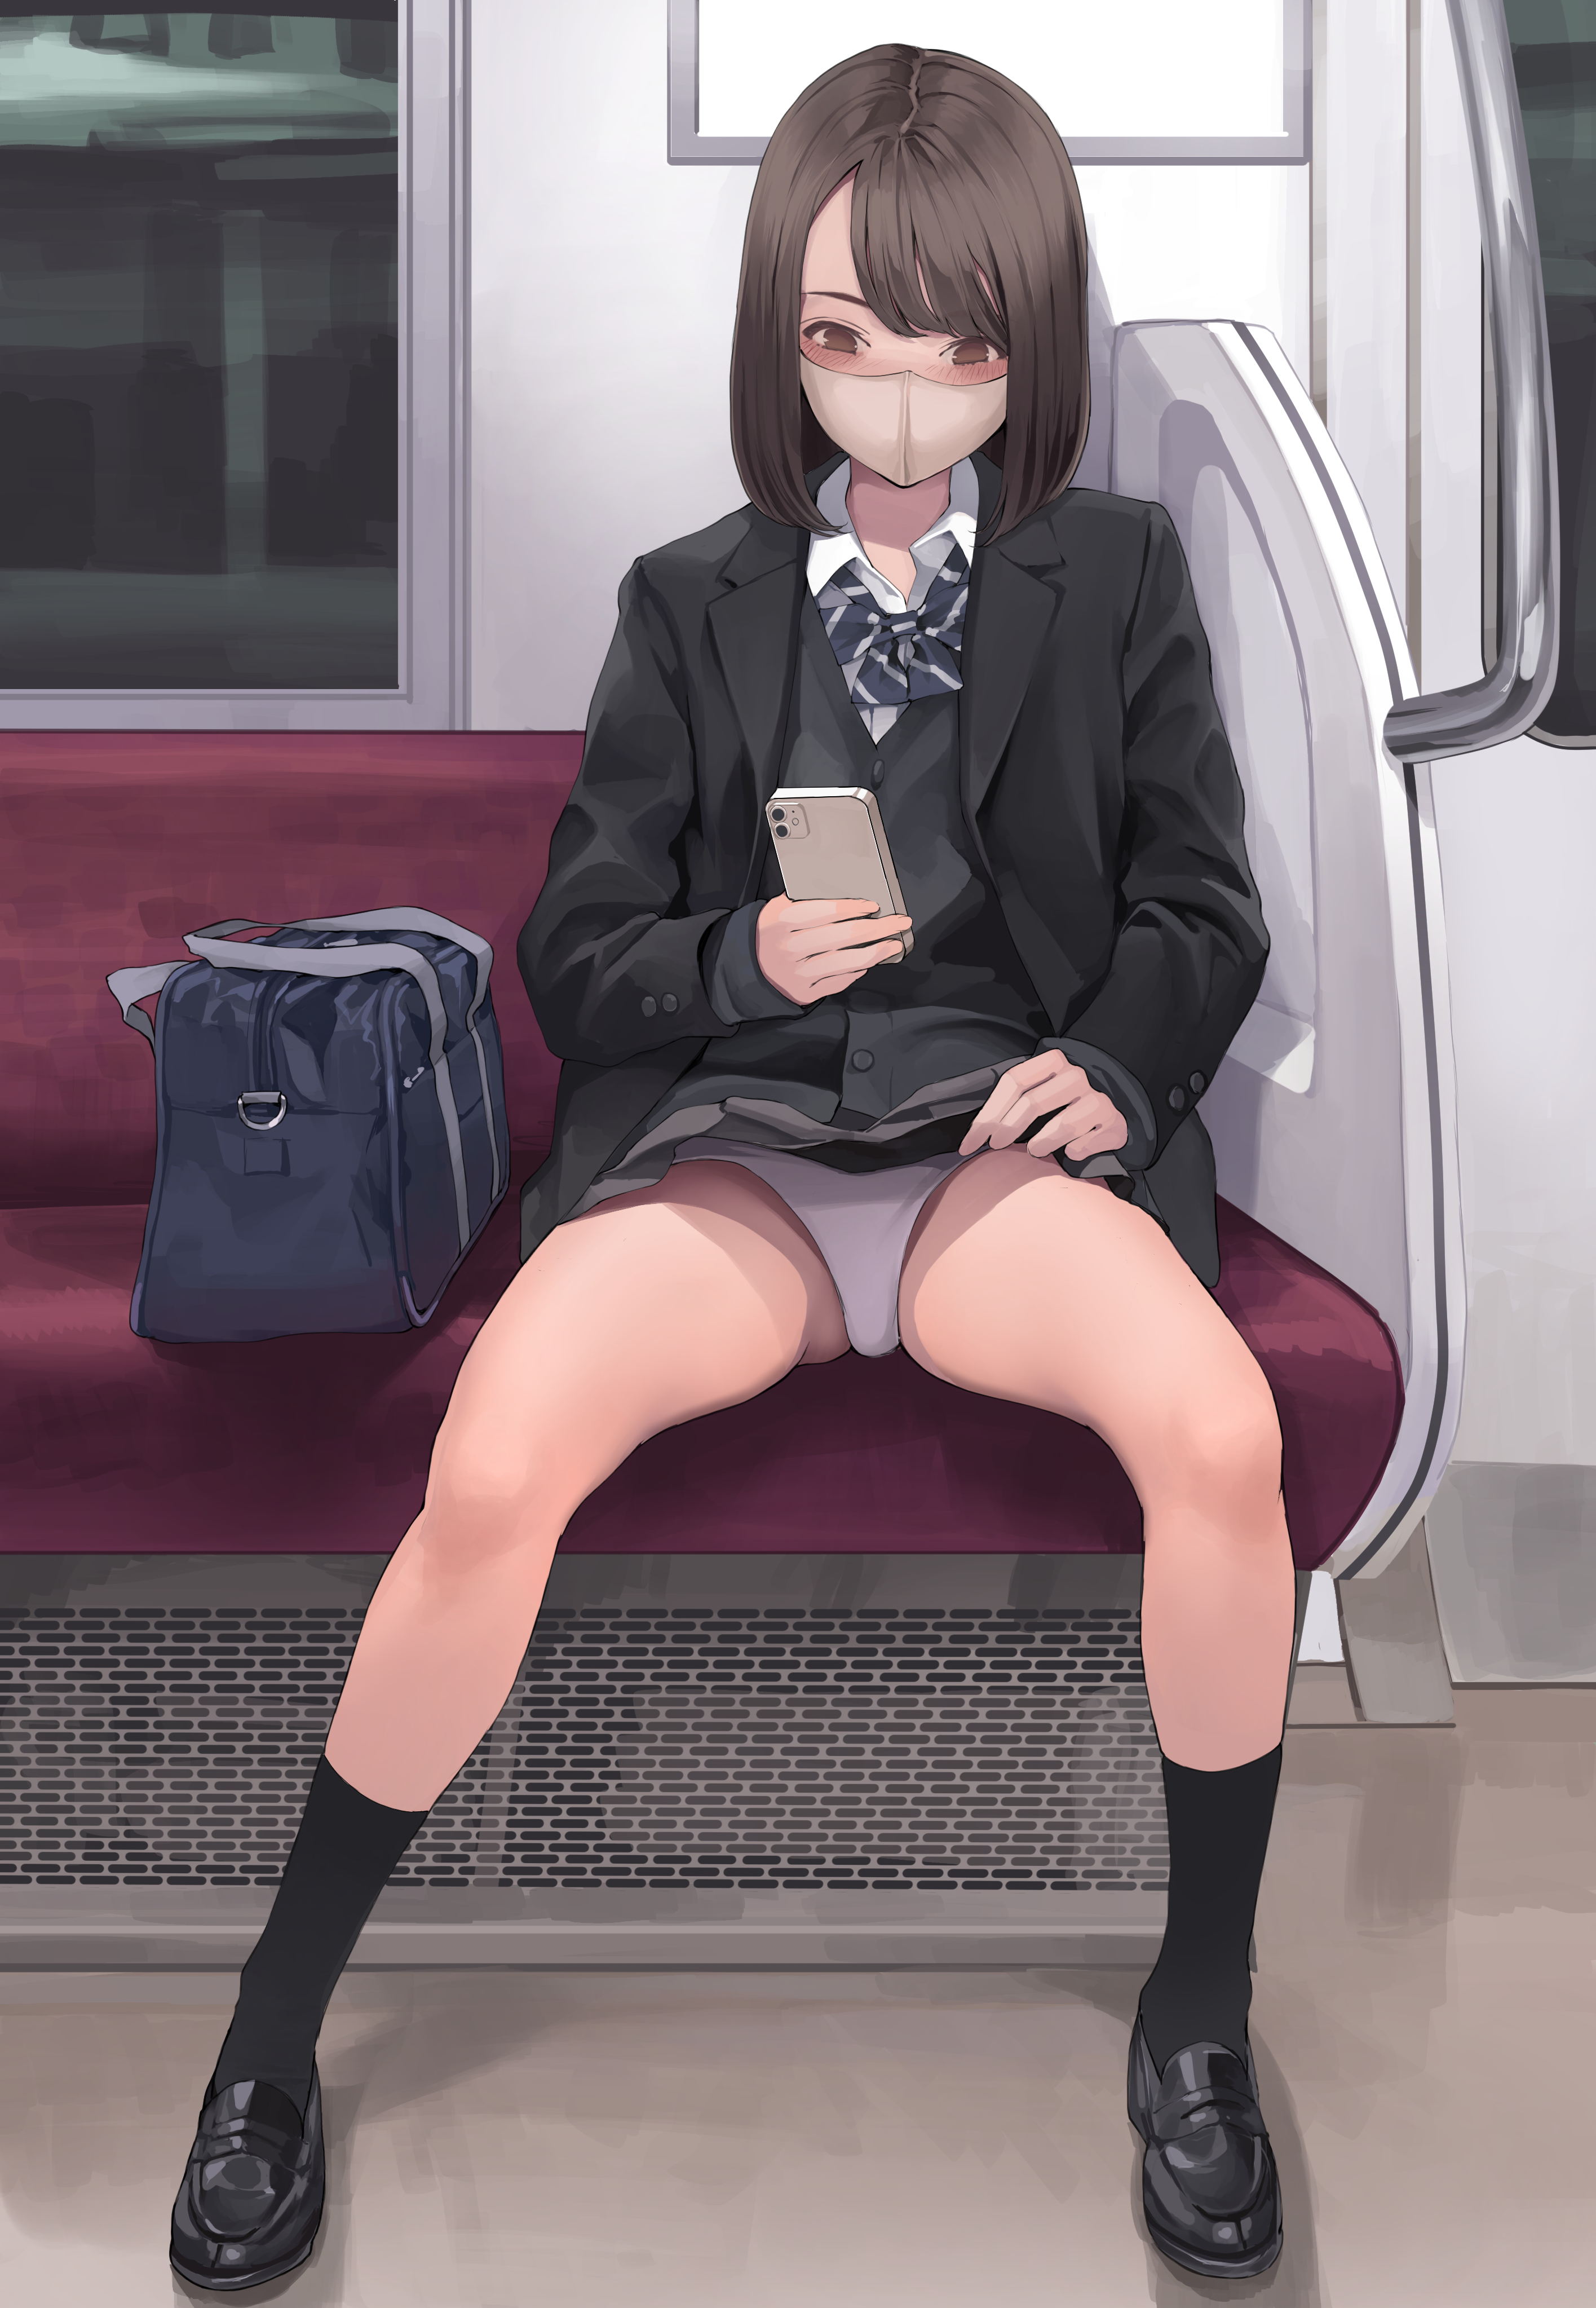 Anime 2831x4093 anime girls anime original characters schoolgirl subway upskirt panties 2D artwork drawing mask blushing koh